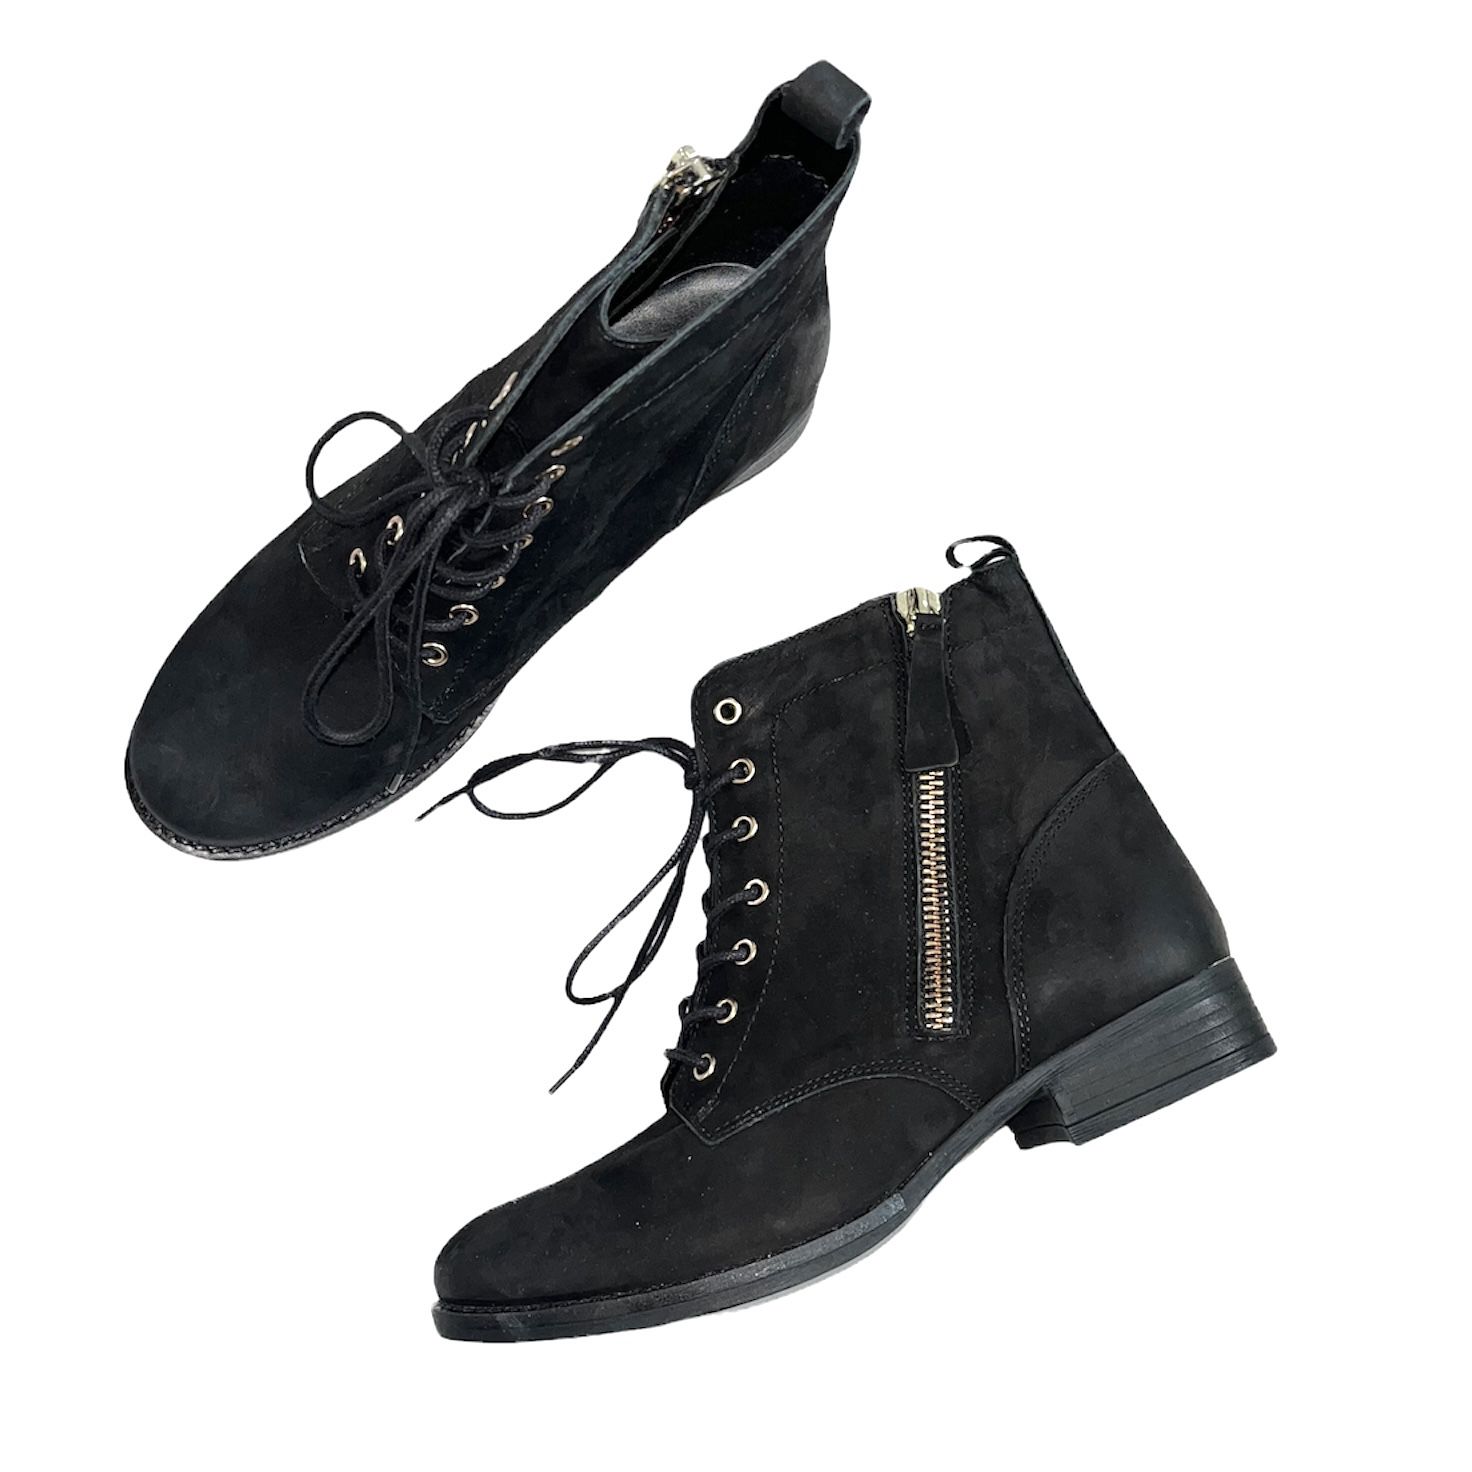 NEW Aldo Women’s Keeler Combat Boots size 10 Black